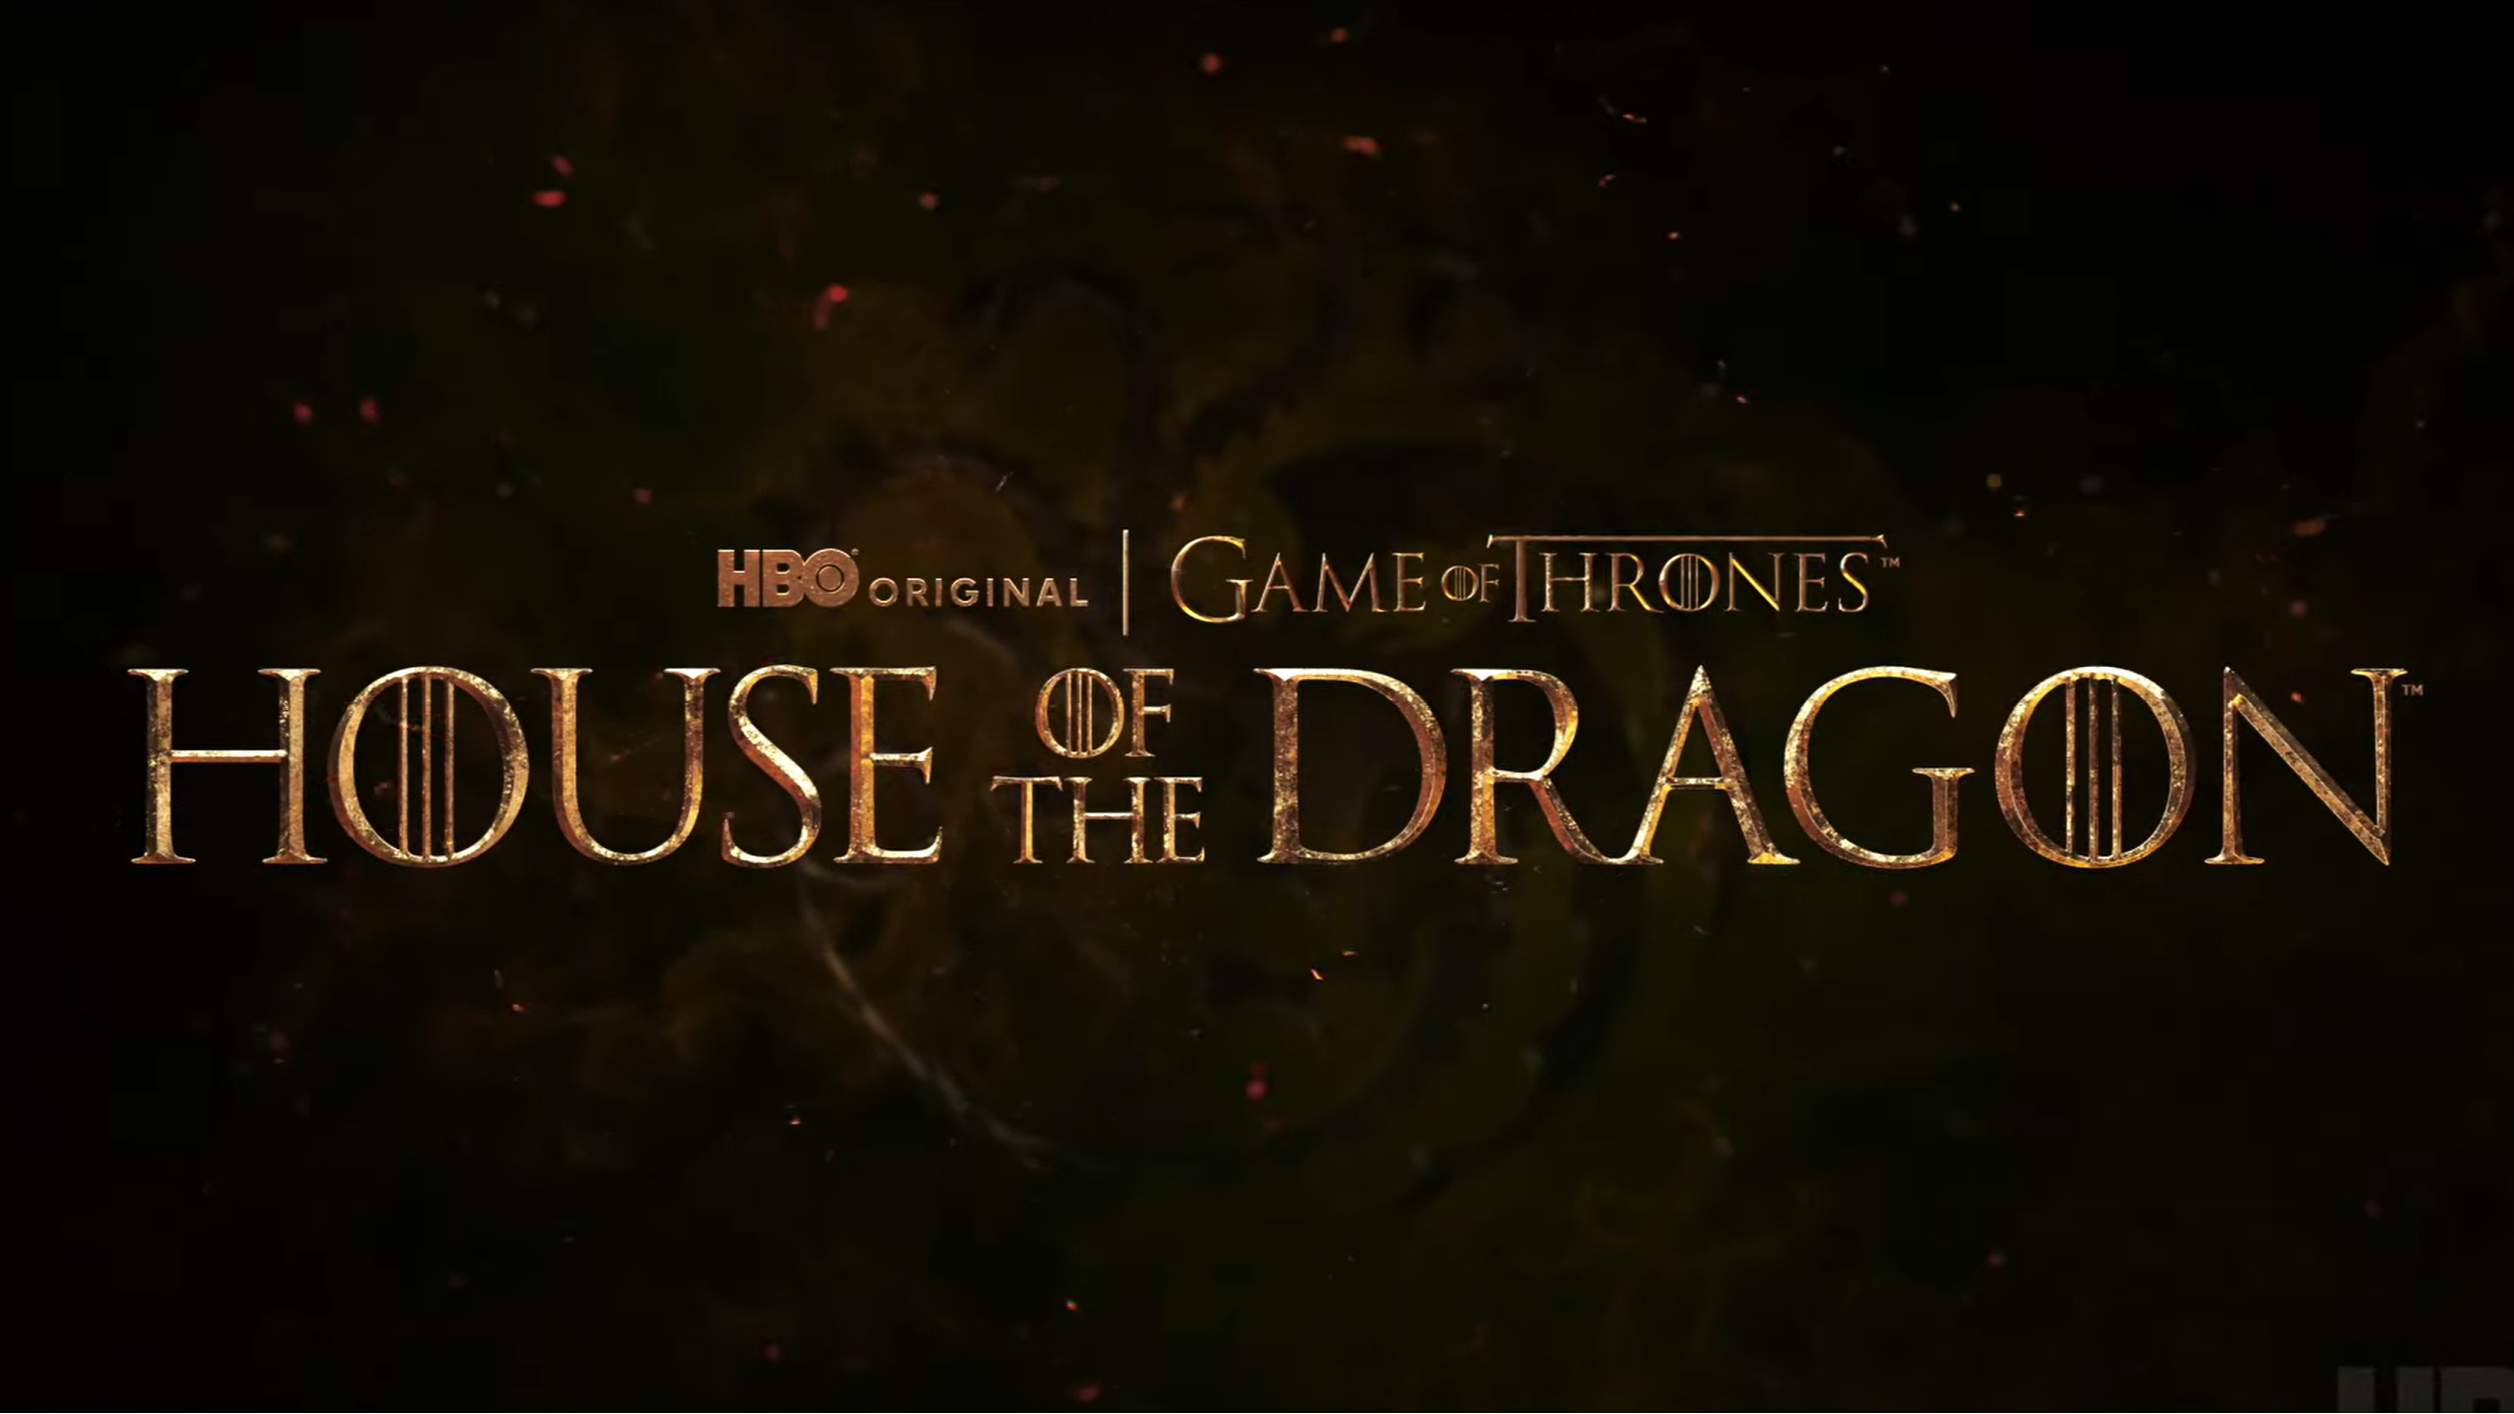 House of the Dragon, Season 2 Preview Trailer